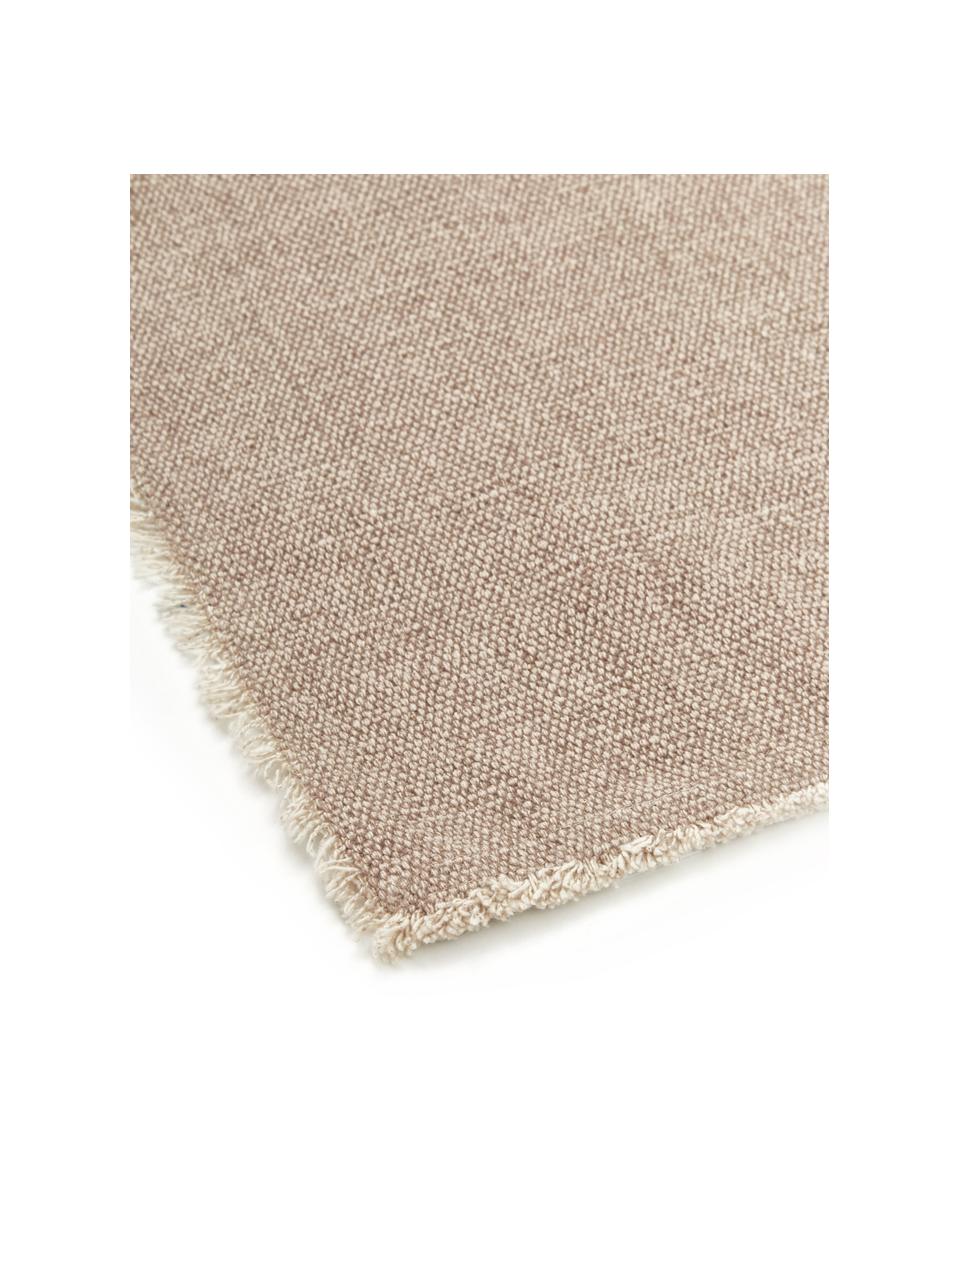 Tovaglietta americana in cotone beige Edge 6 pz, 85% cotone, 15% fibre miste, Beige, Larg. 35 x Lung. 48 cm